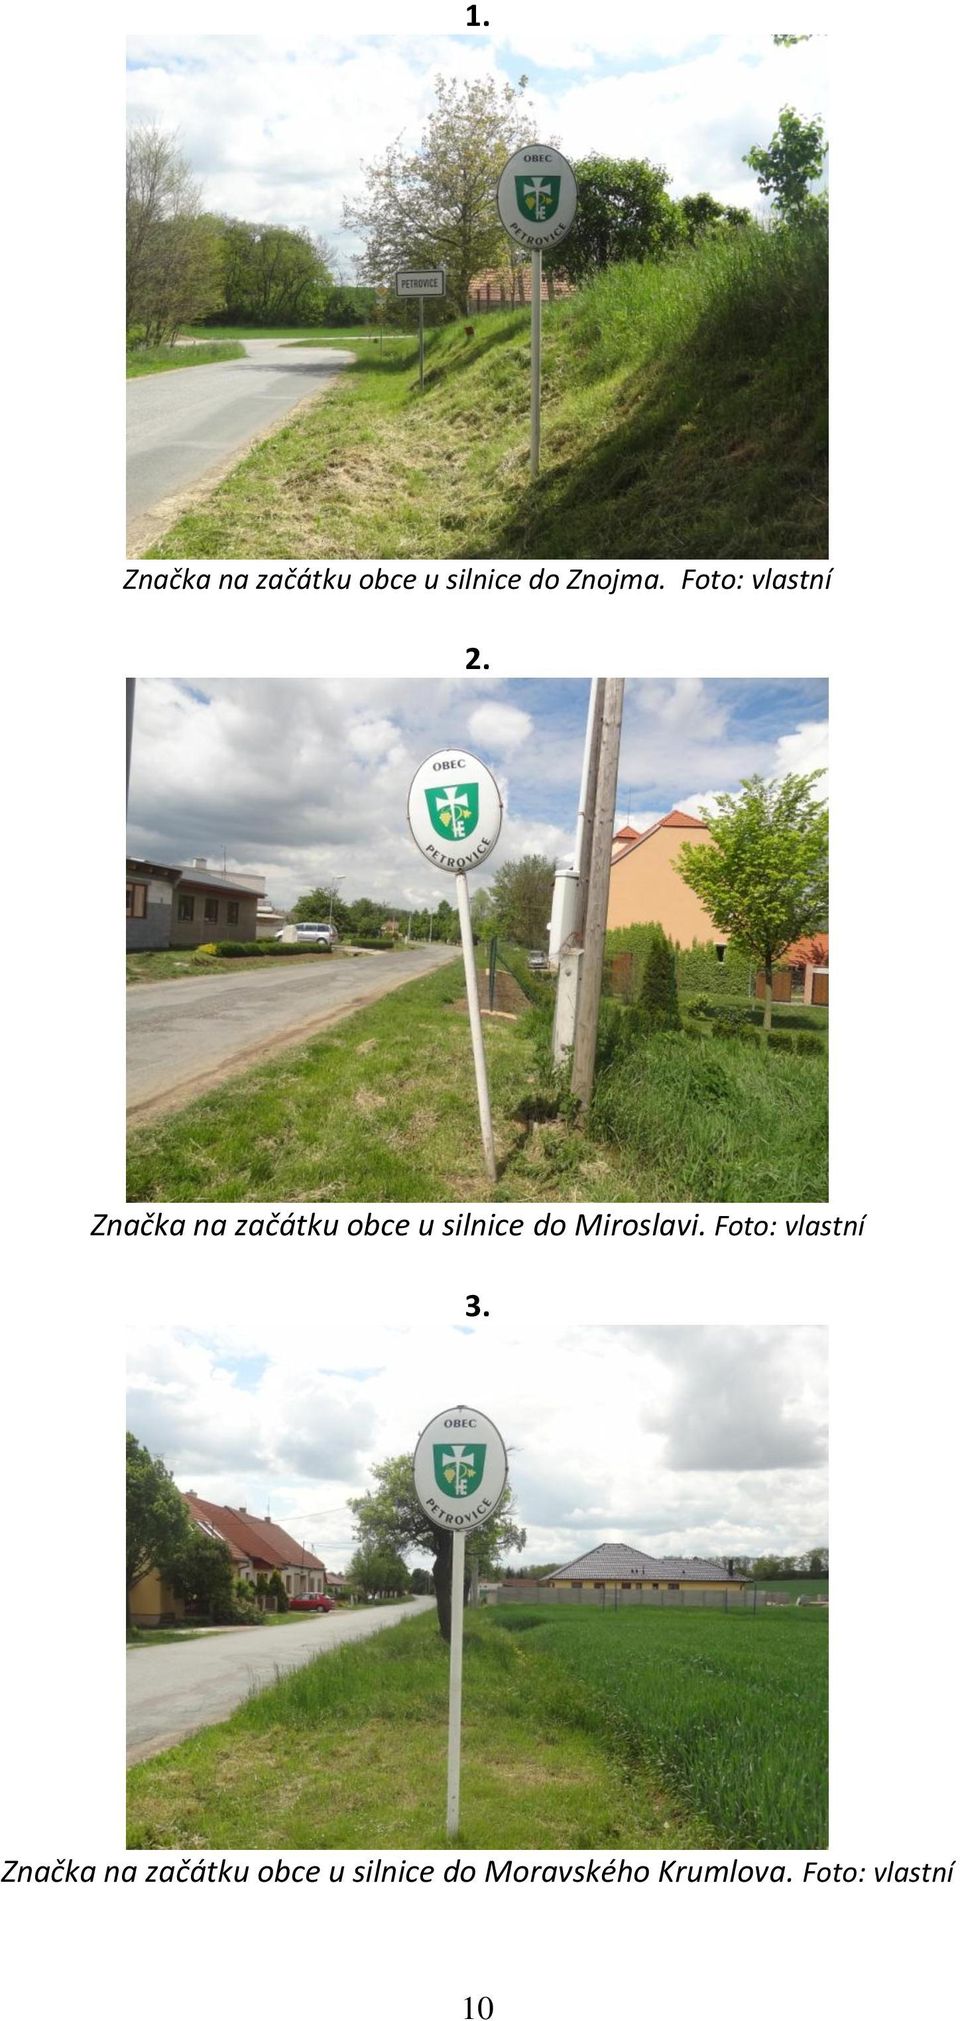 Značka na začátku obce u silnice do Miroslavi.